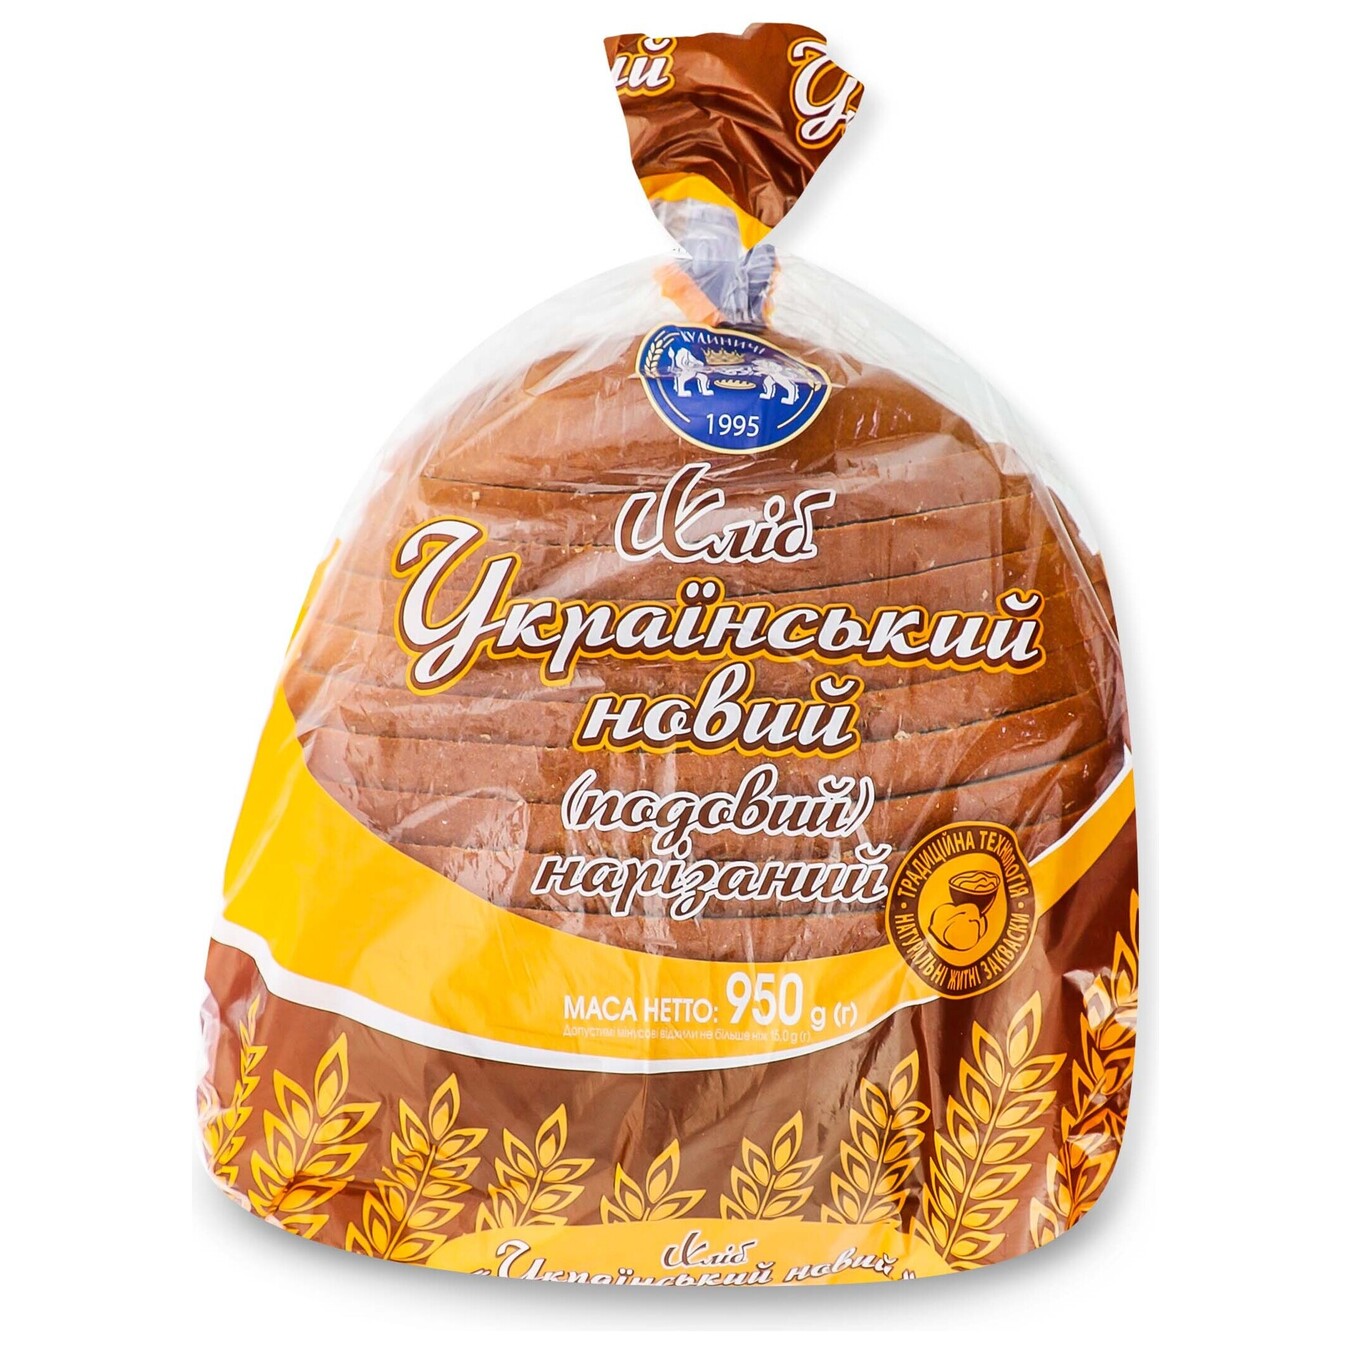 Kulinichi Ukrainian sliced bread 950g